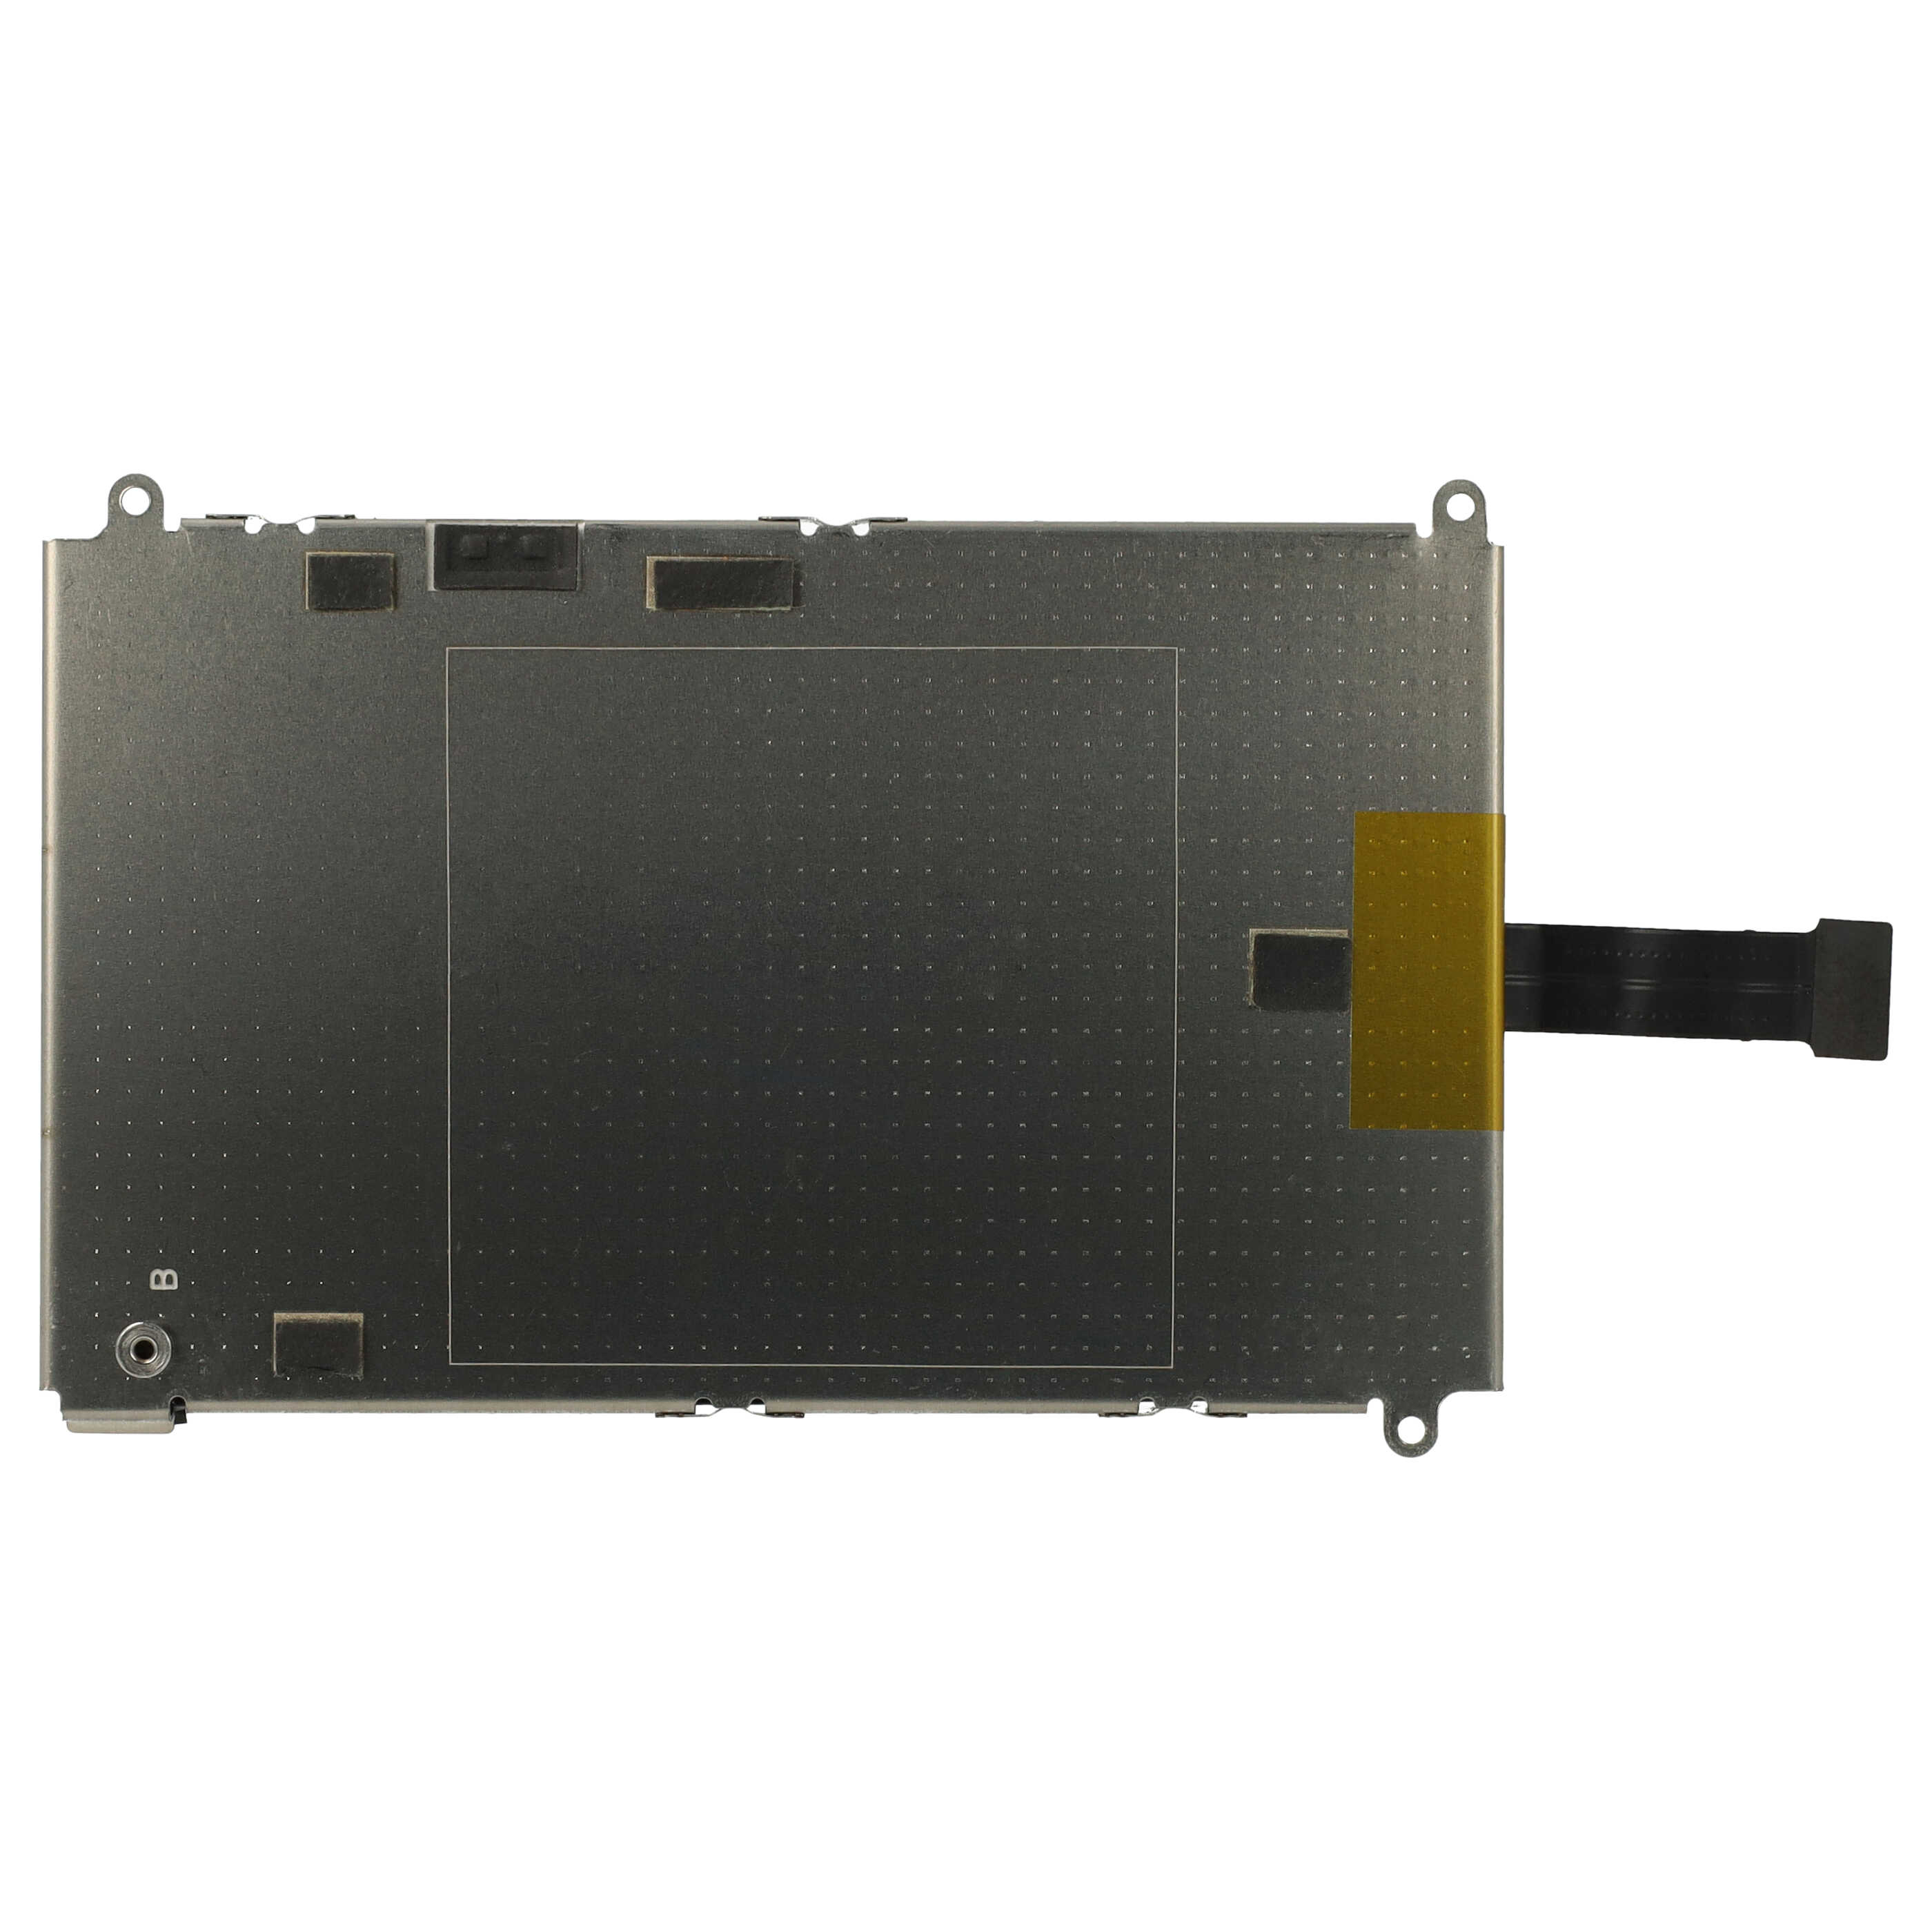 Akumulator do mobilnego routera / modemu WiFi zamiennik GlocalMe G1611 - 4400 mAh 3,7 V LiPo